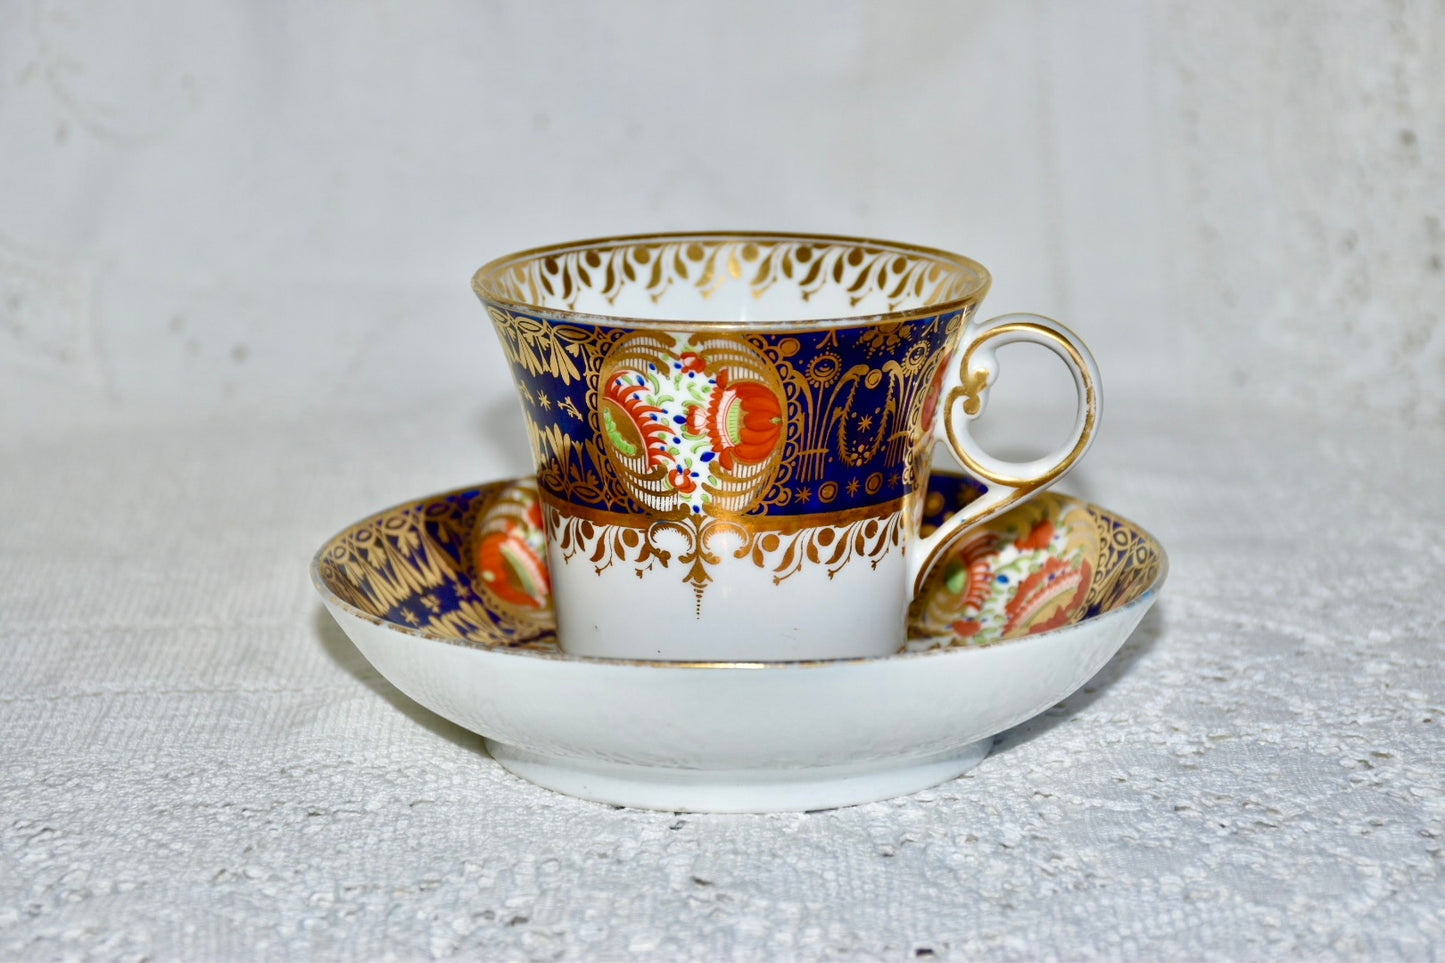 Antique English Porcelain Teacup and Saucer Imari Derby design 19th century 